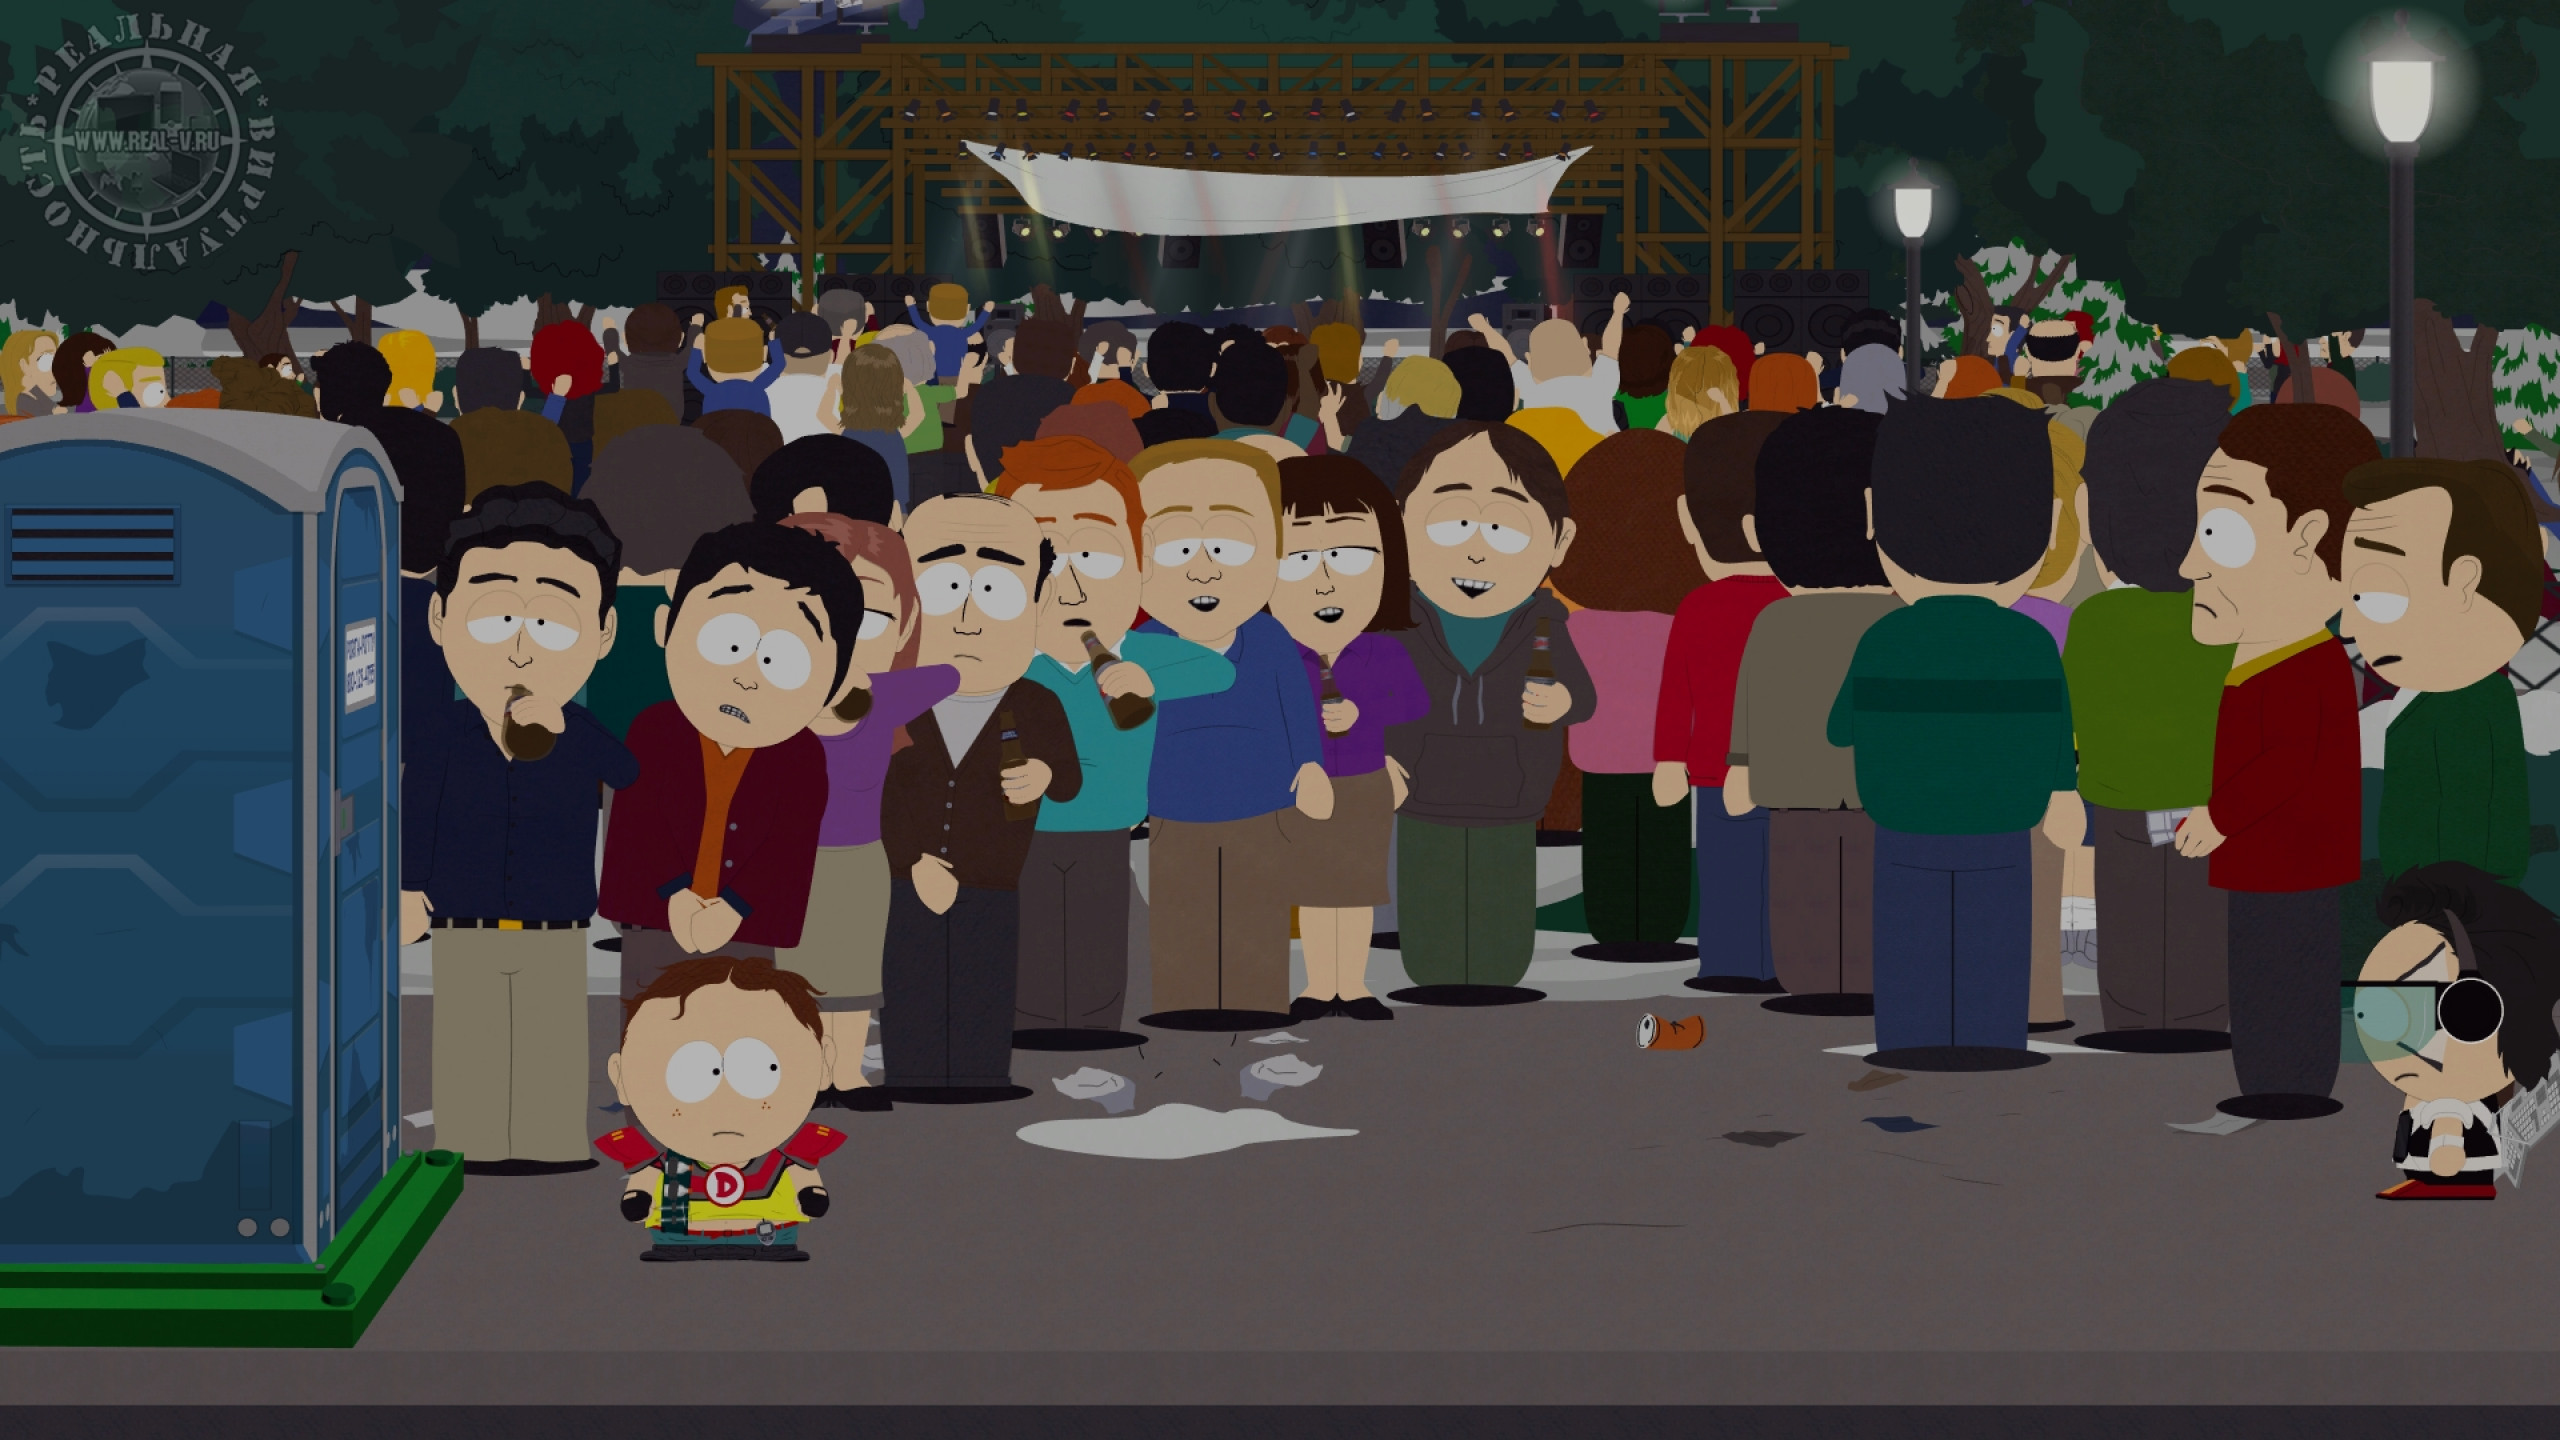 Vreski s game. Freedom Pals South Park. Мрдно ли сделать селфи с мэром в игре South Park. Можно ли сделать селфи с мэром в игре South Park.